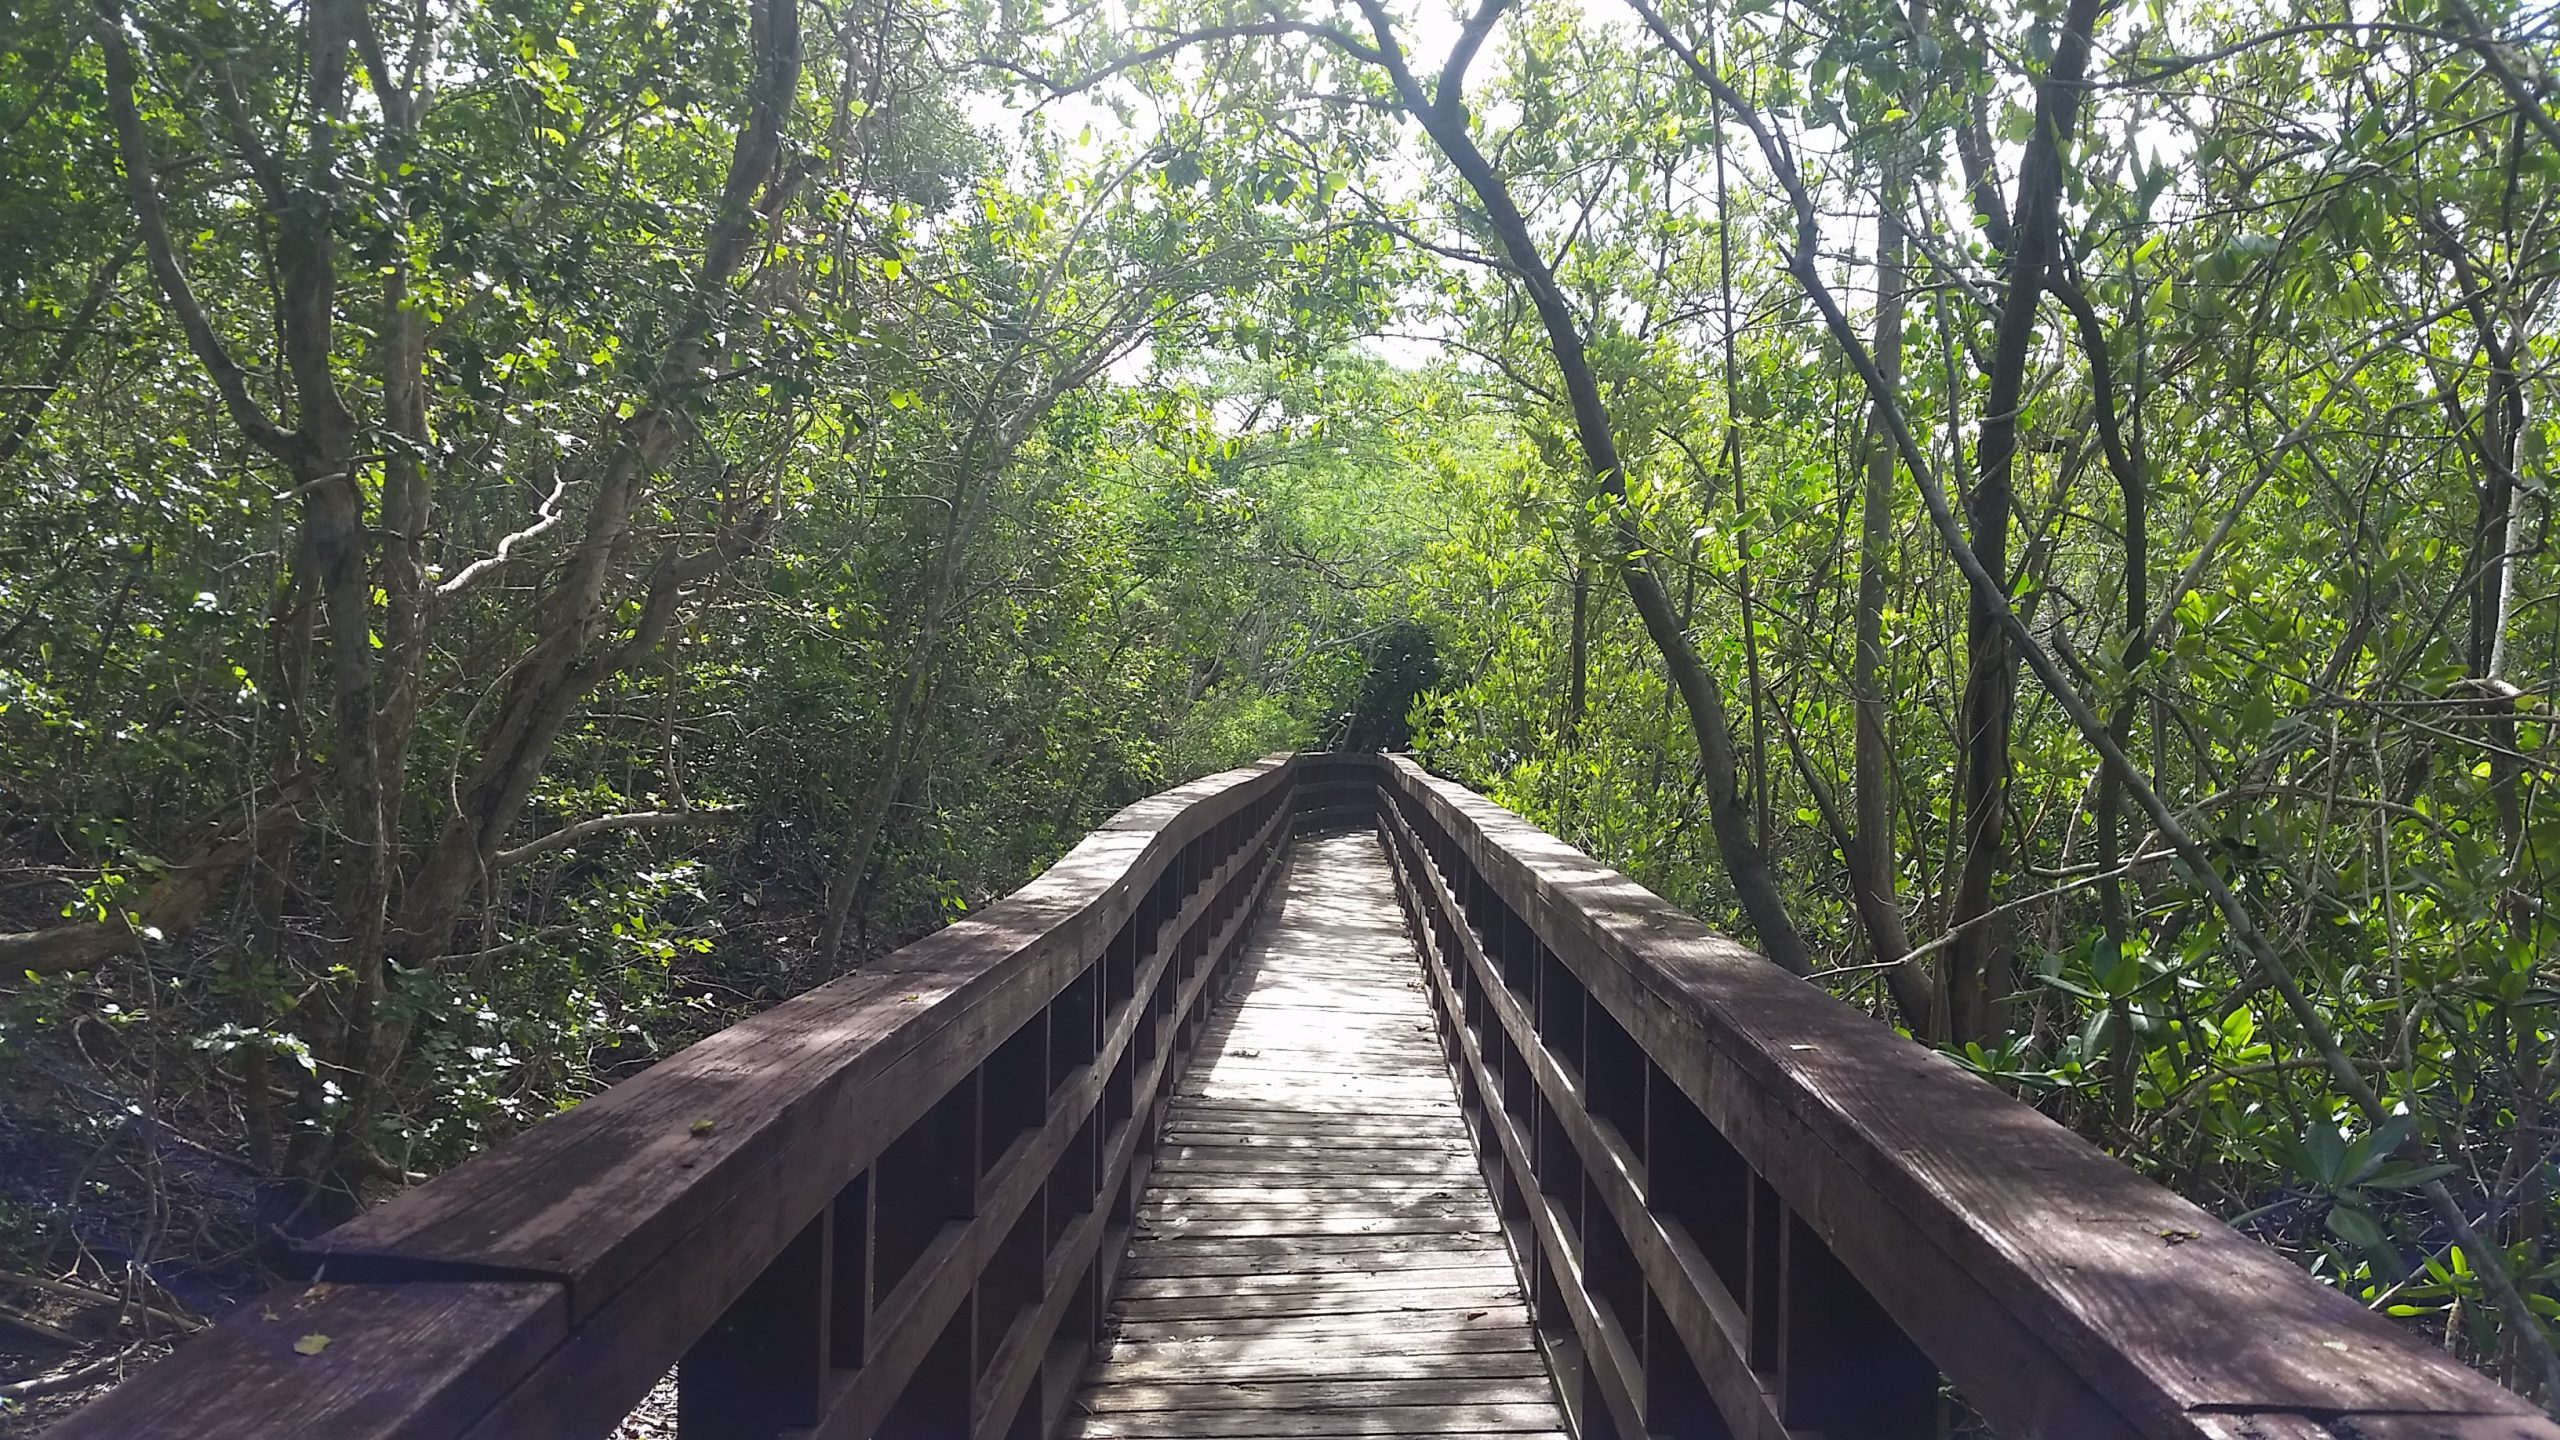 Wooden path through a jungle